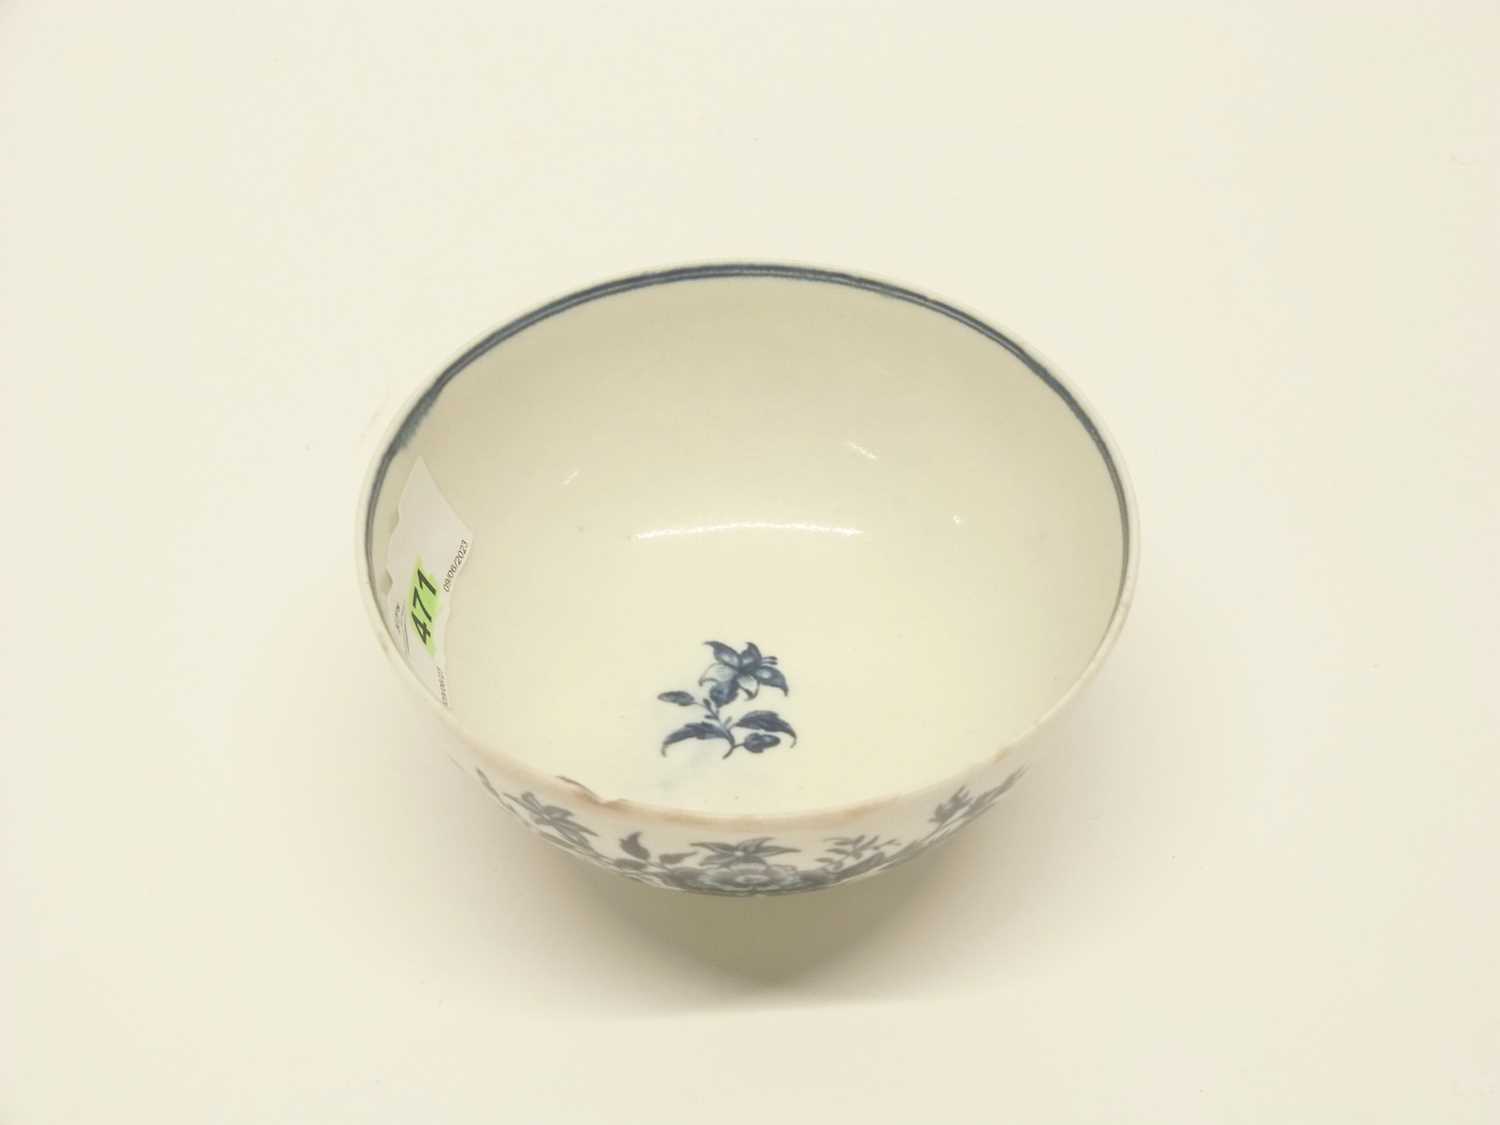 Worcester porcelain slop bowl with blue printed pattern, 12cm diameter - Image 2 of 2